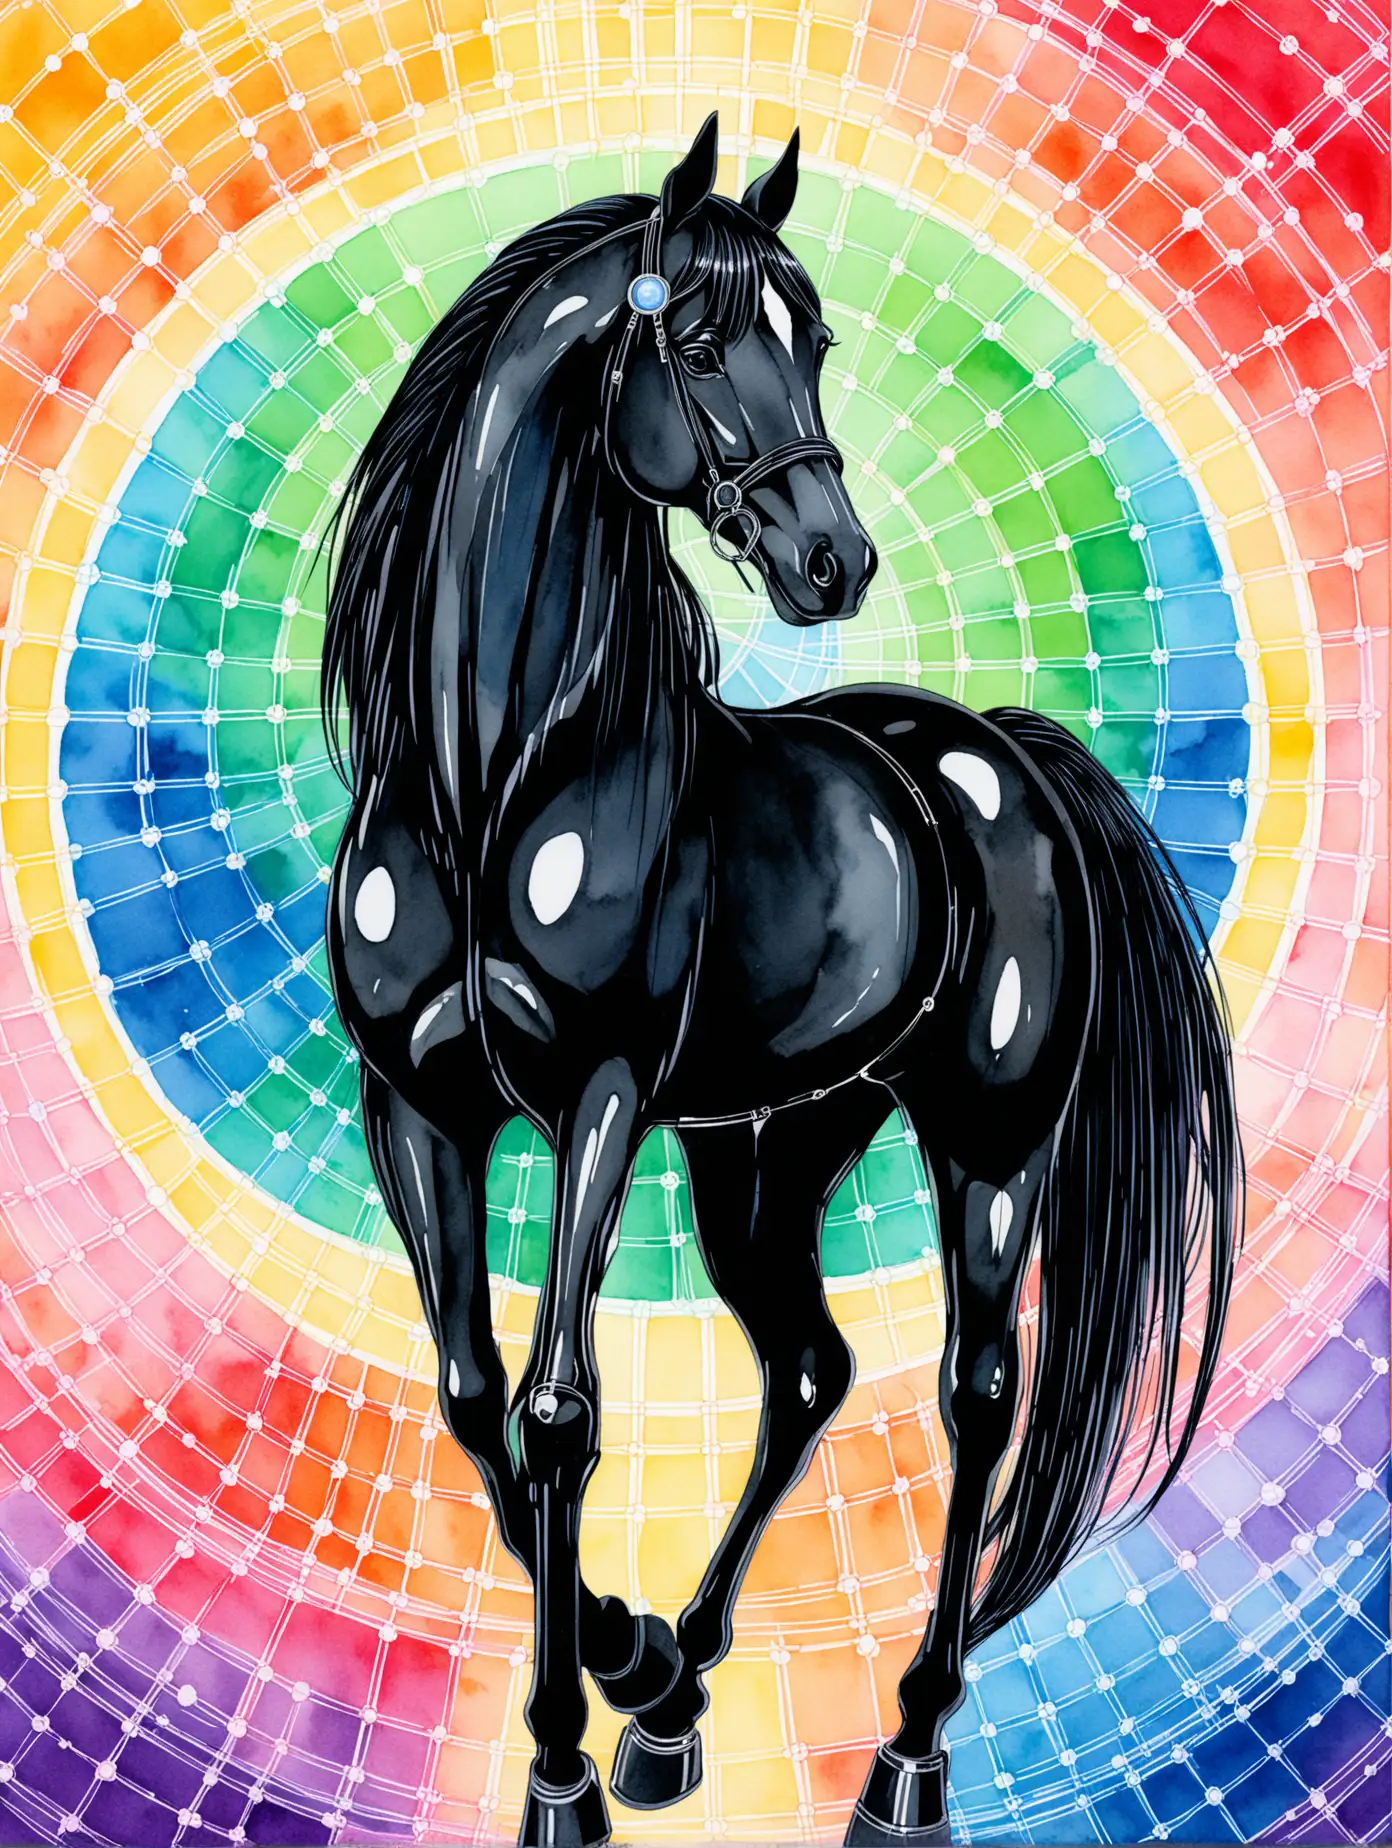 Black horse, matrix , computer theme, detailed, vivid watercolors, hilma af klint style, futuristic 